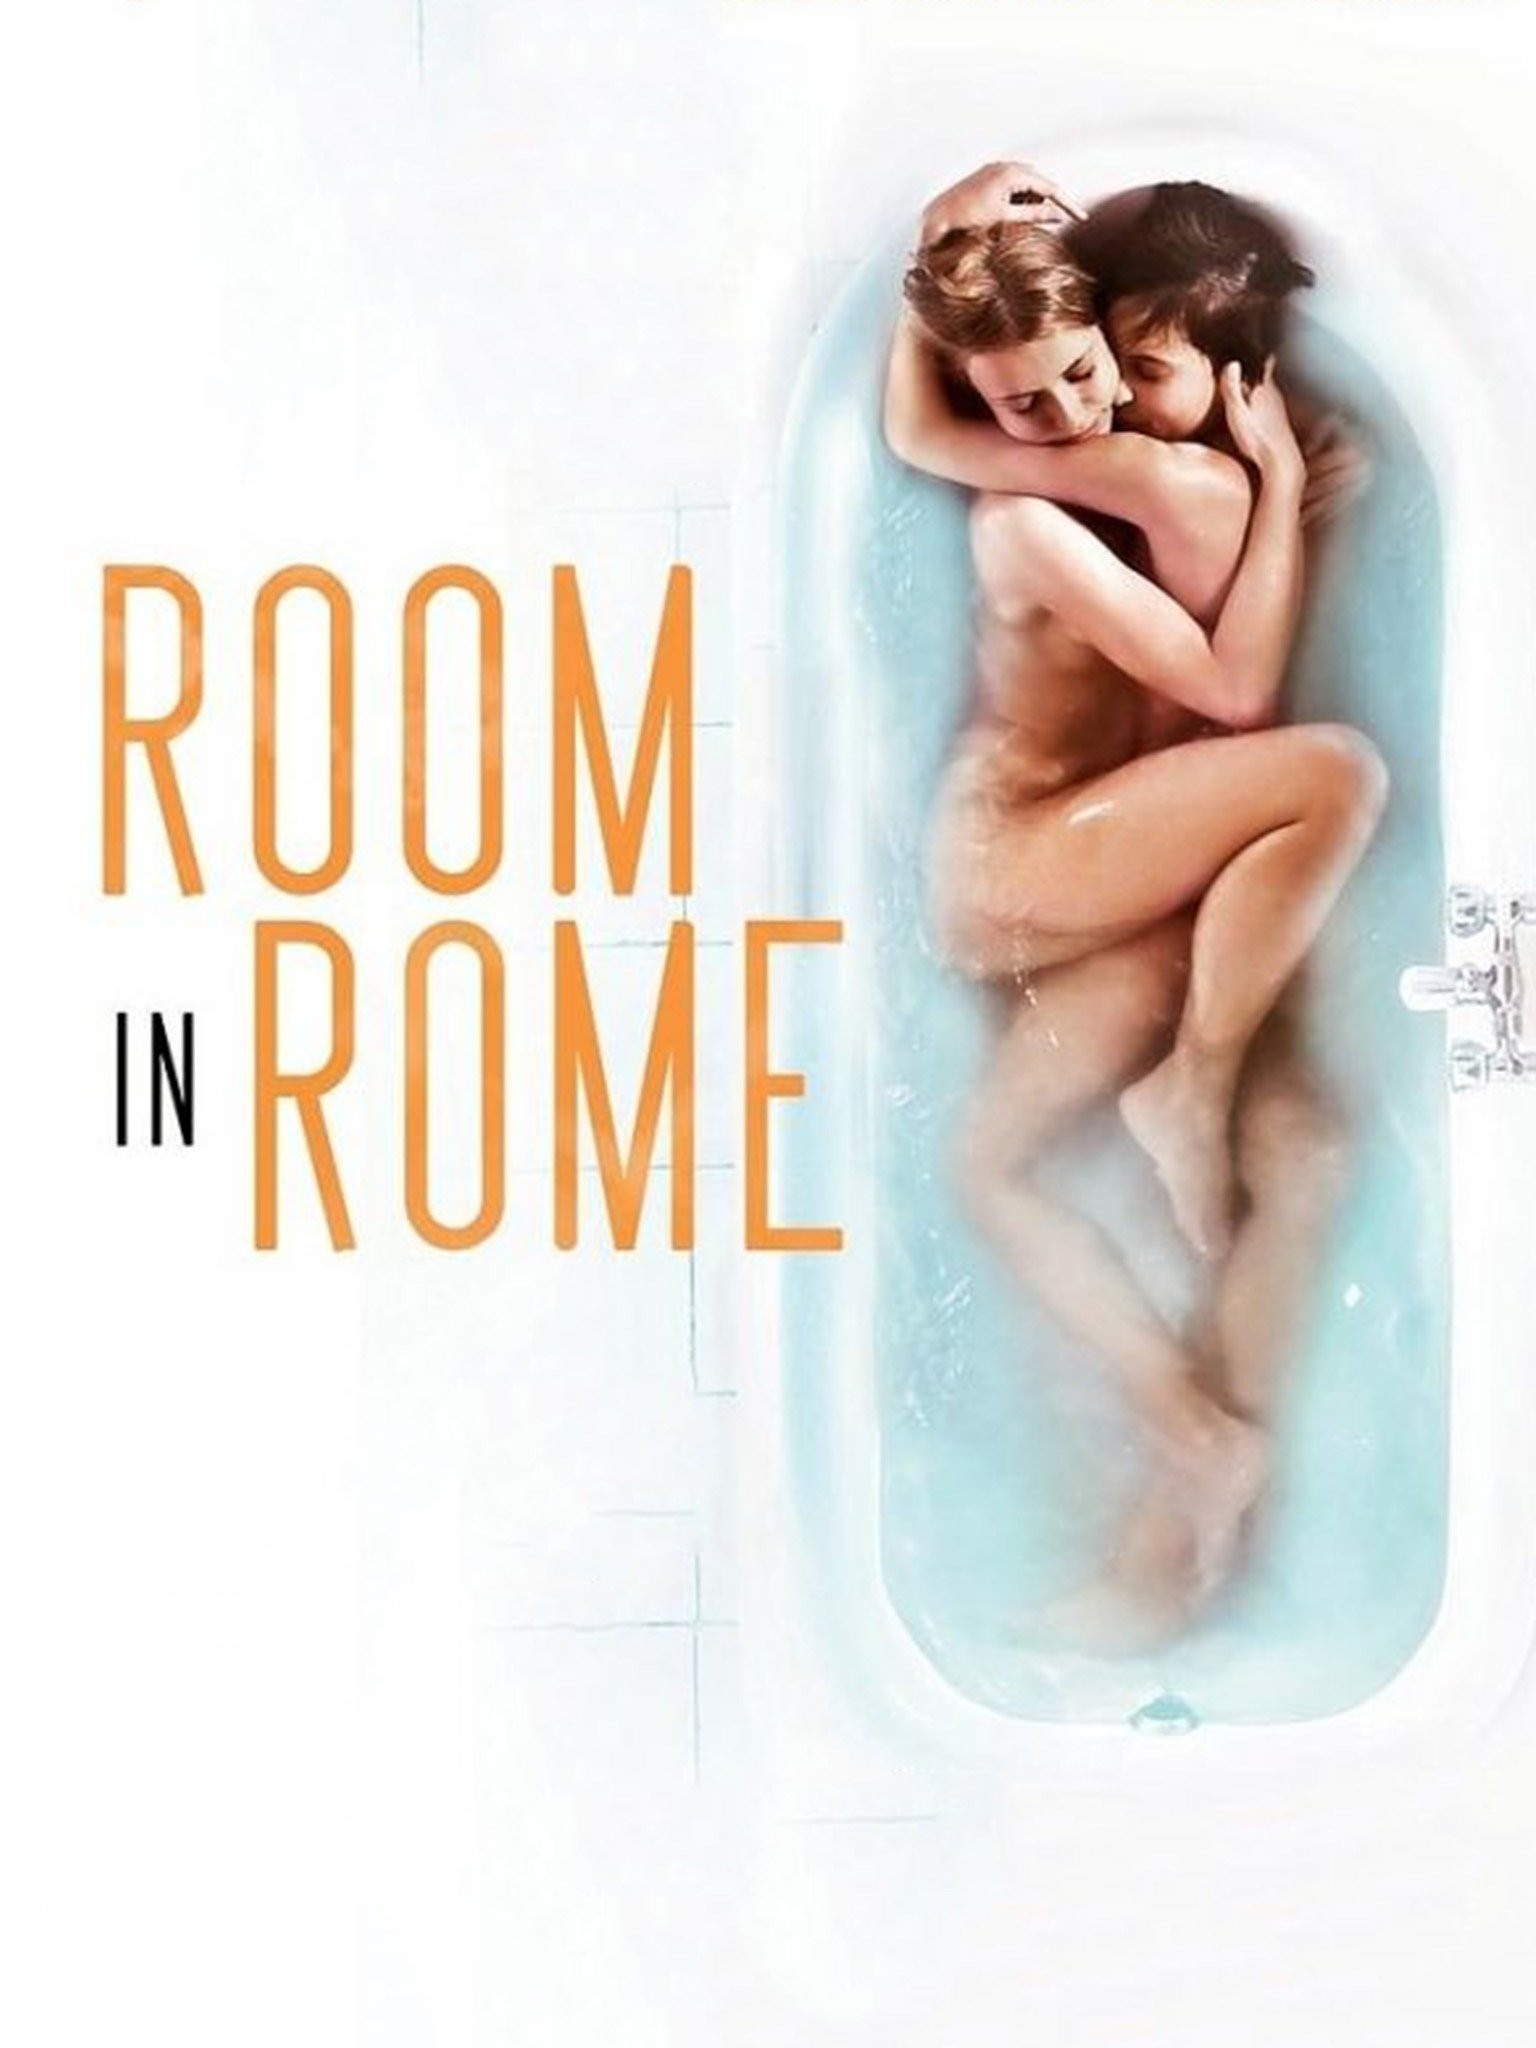 brianna coles recommends room in rome scene pic